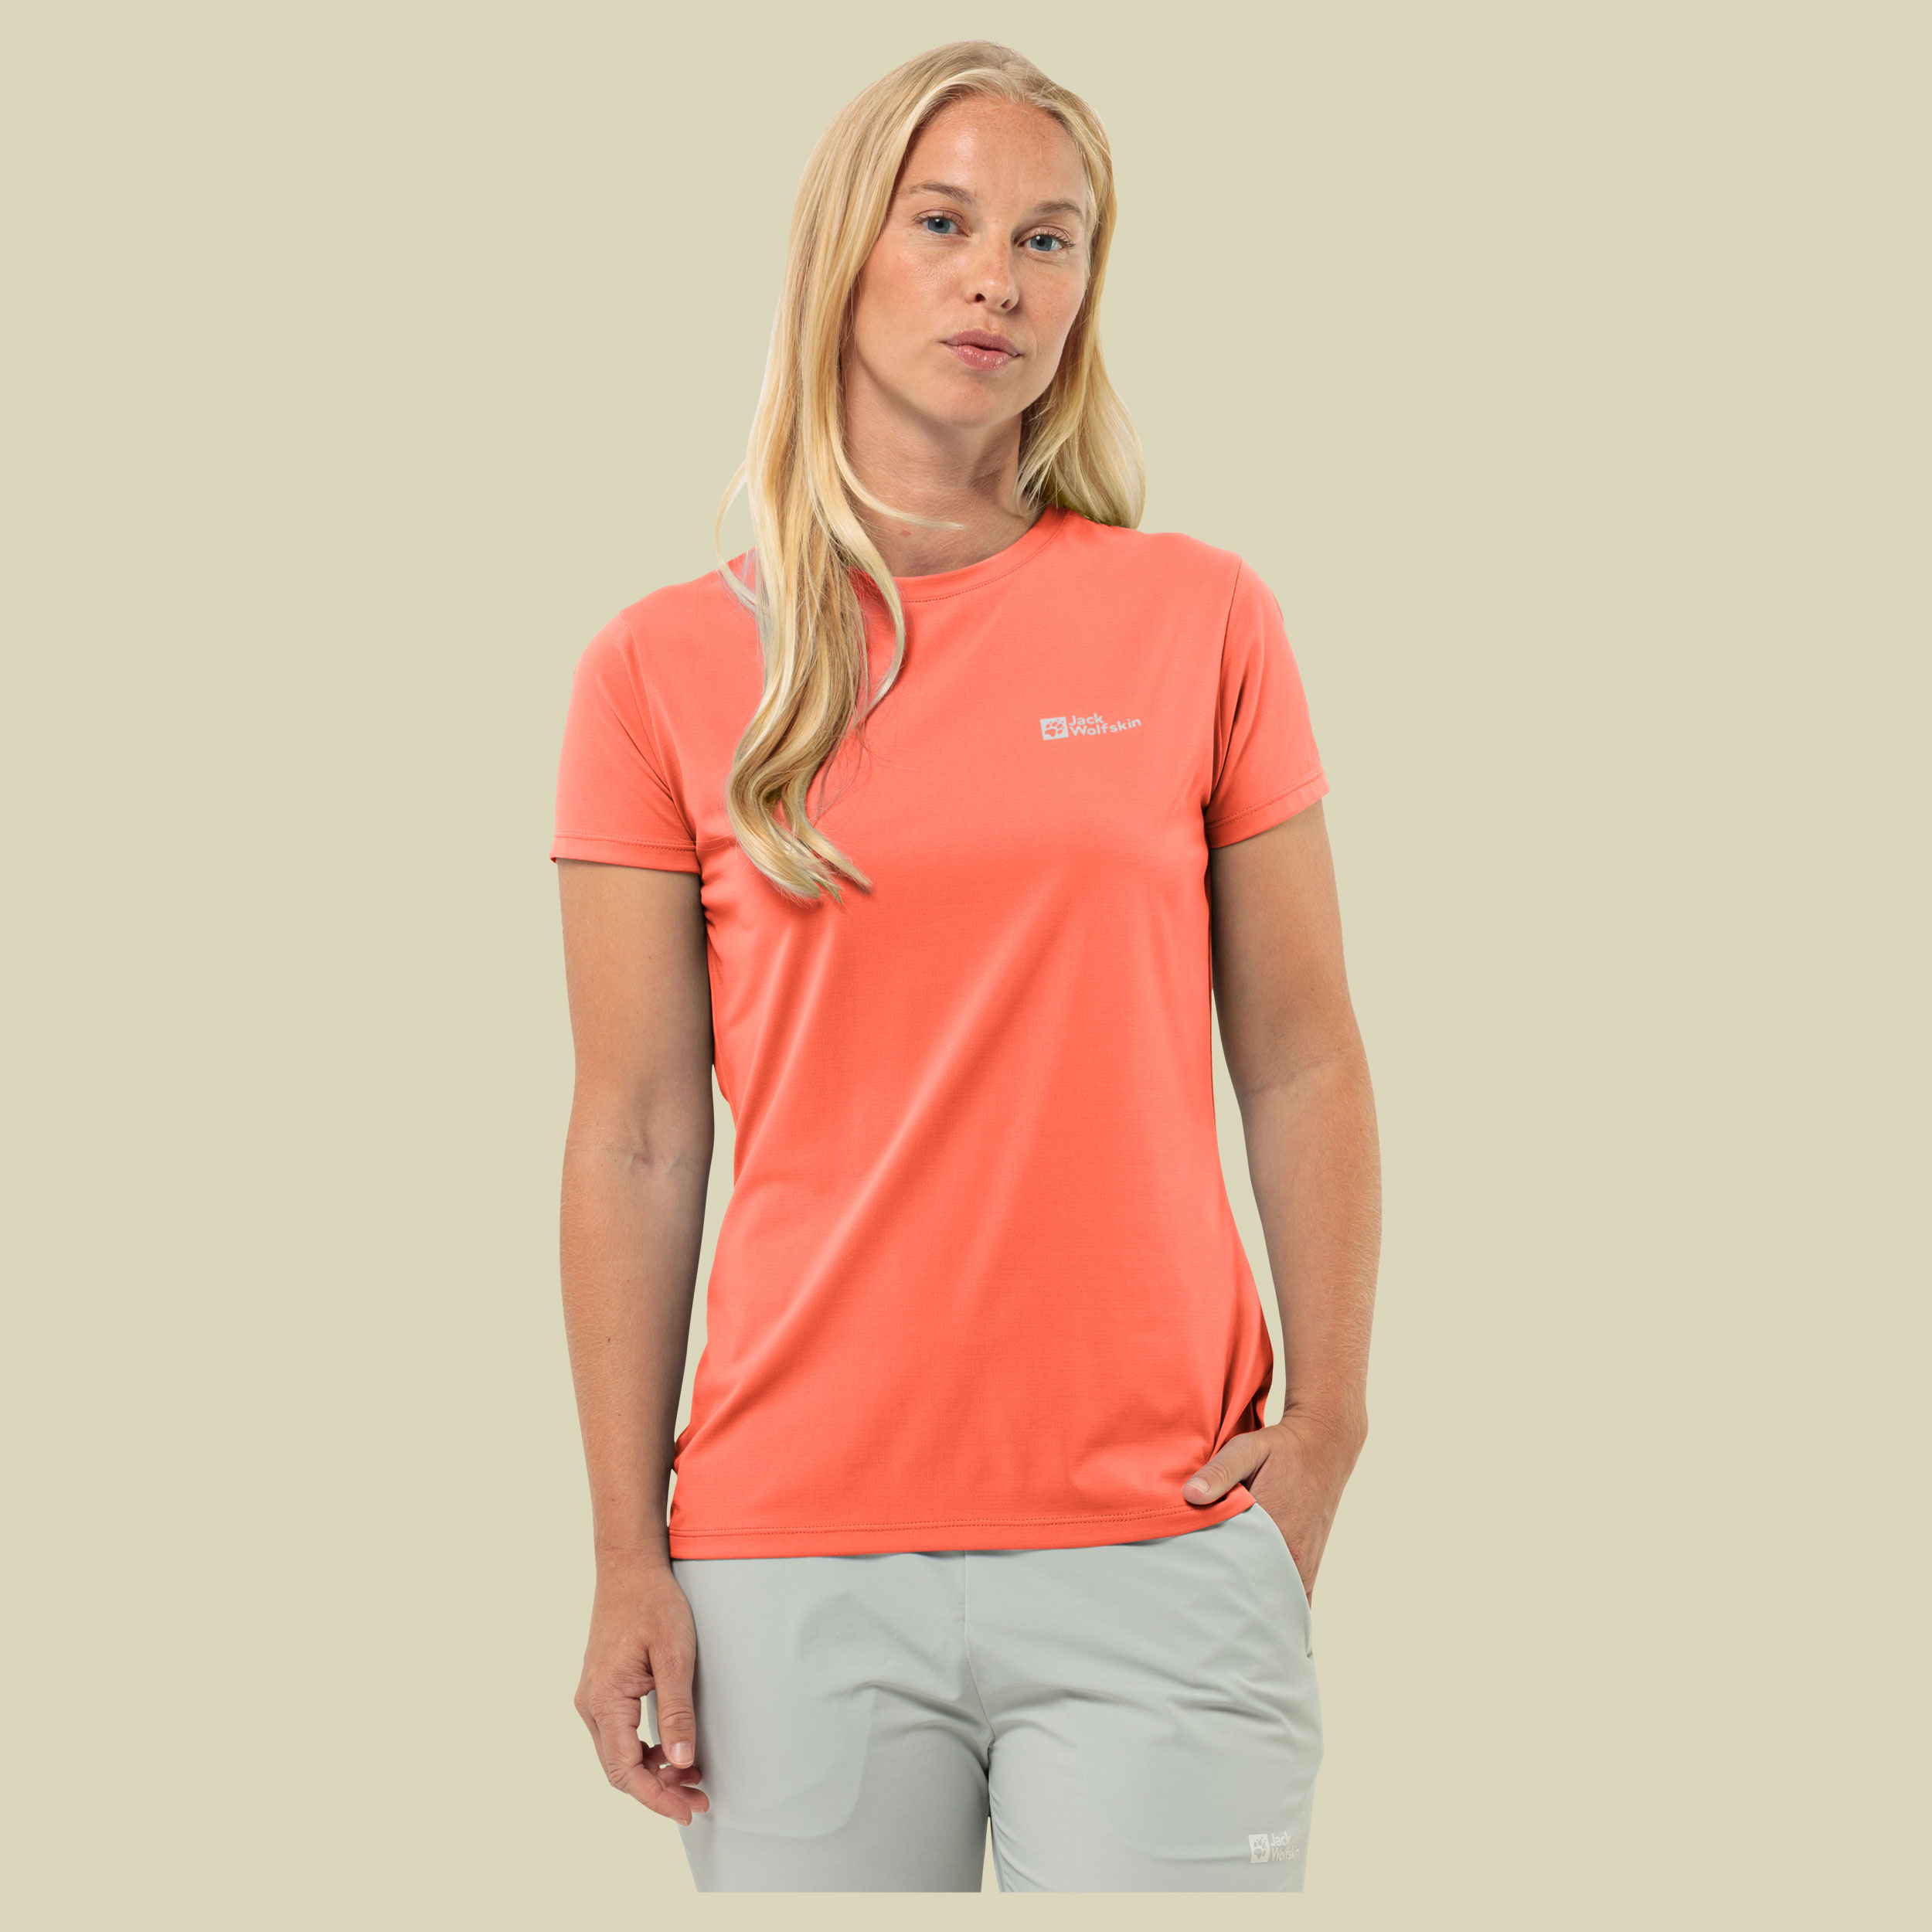 Prelight Trail T Women XL orange - digital orange